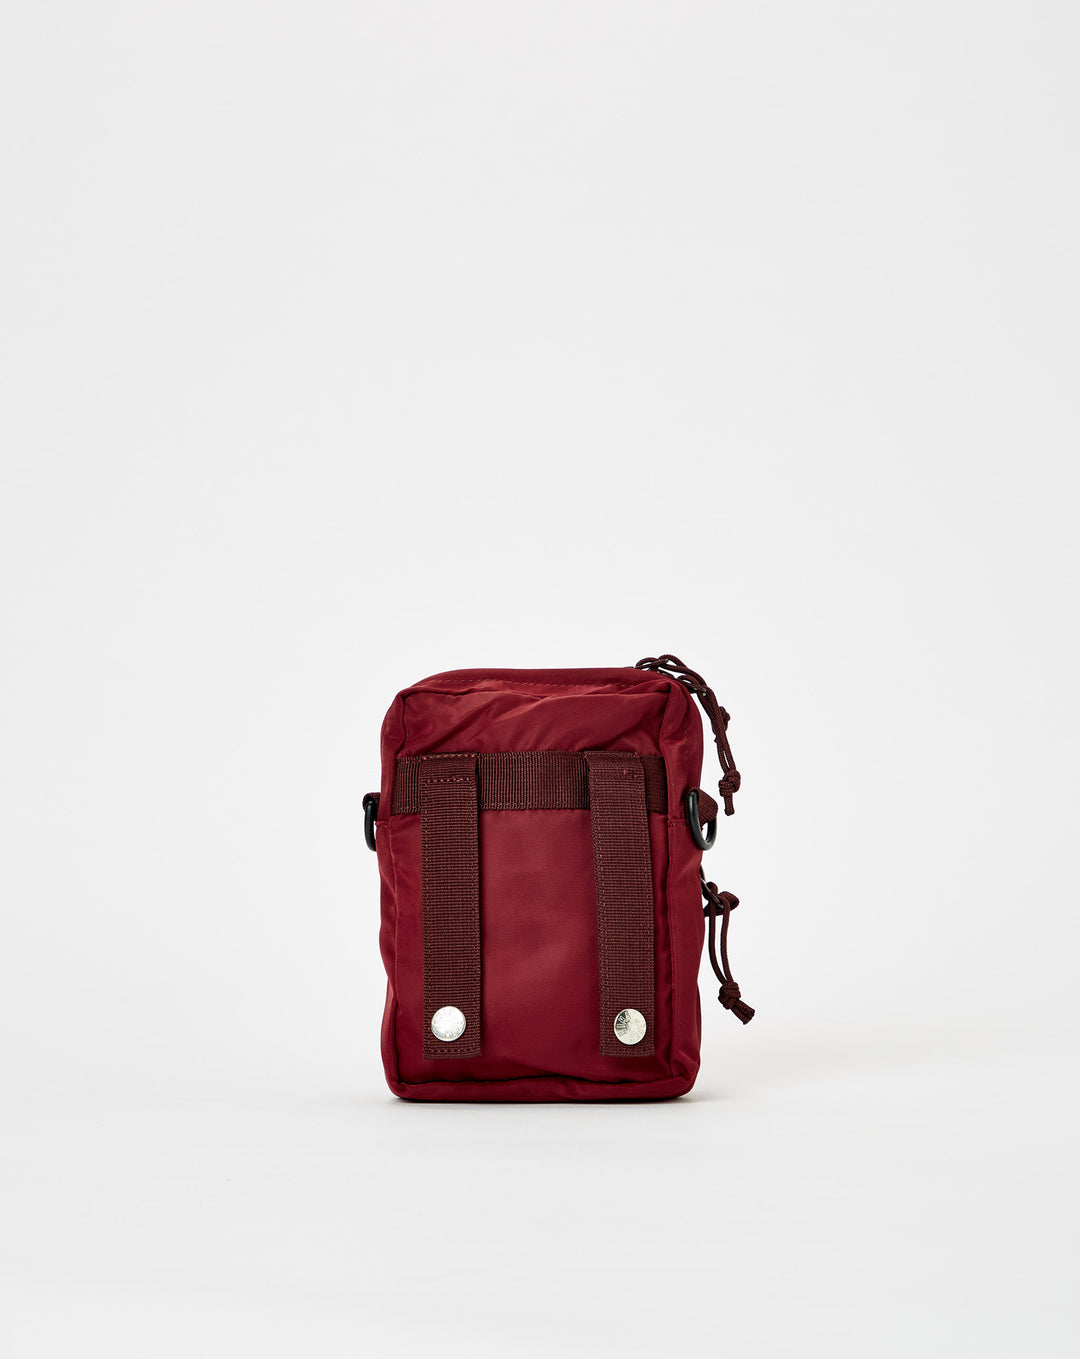 Human Made Bag backpack Vans Mn League Bench Bag VN0002W6Y28  - Cheap Erlebniswelt-fliegenfischen Jordan outlet